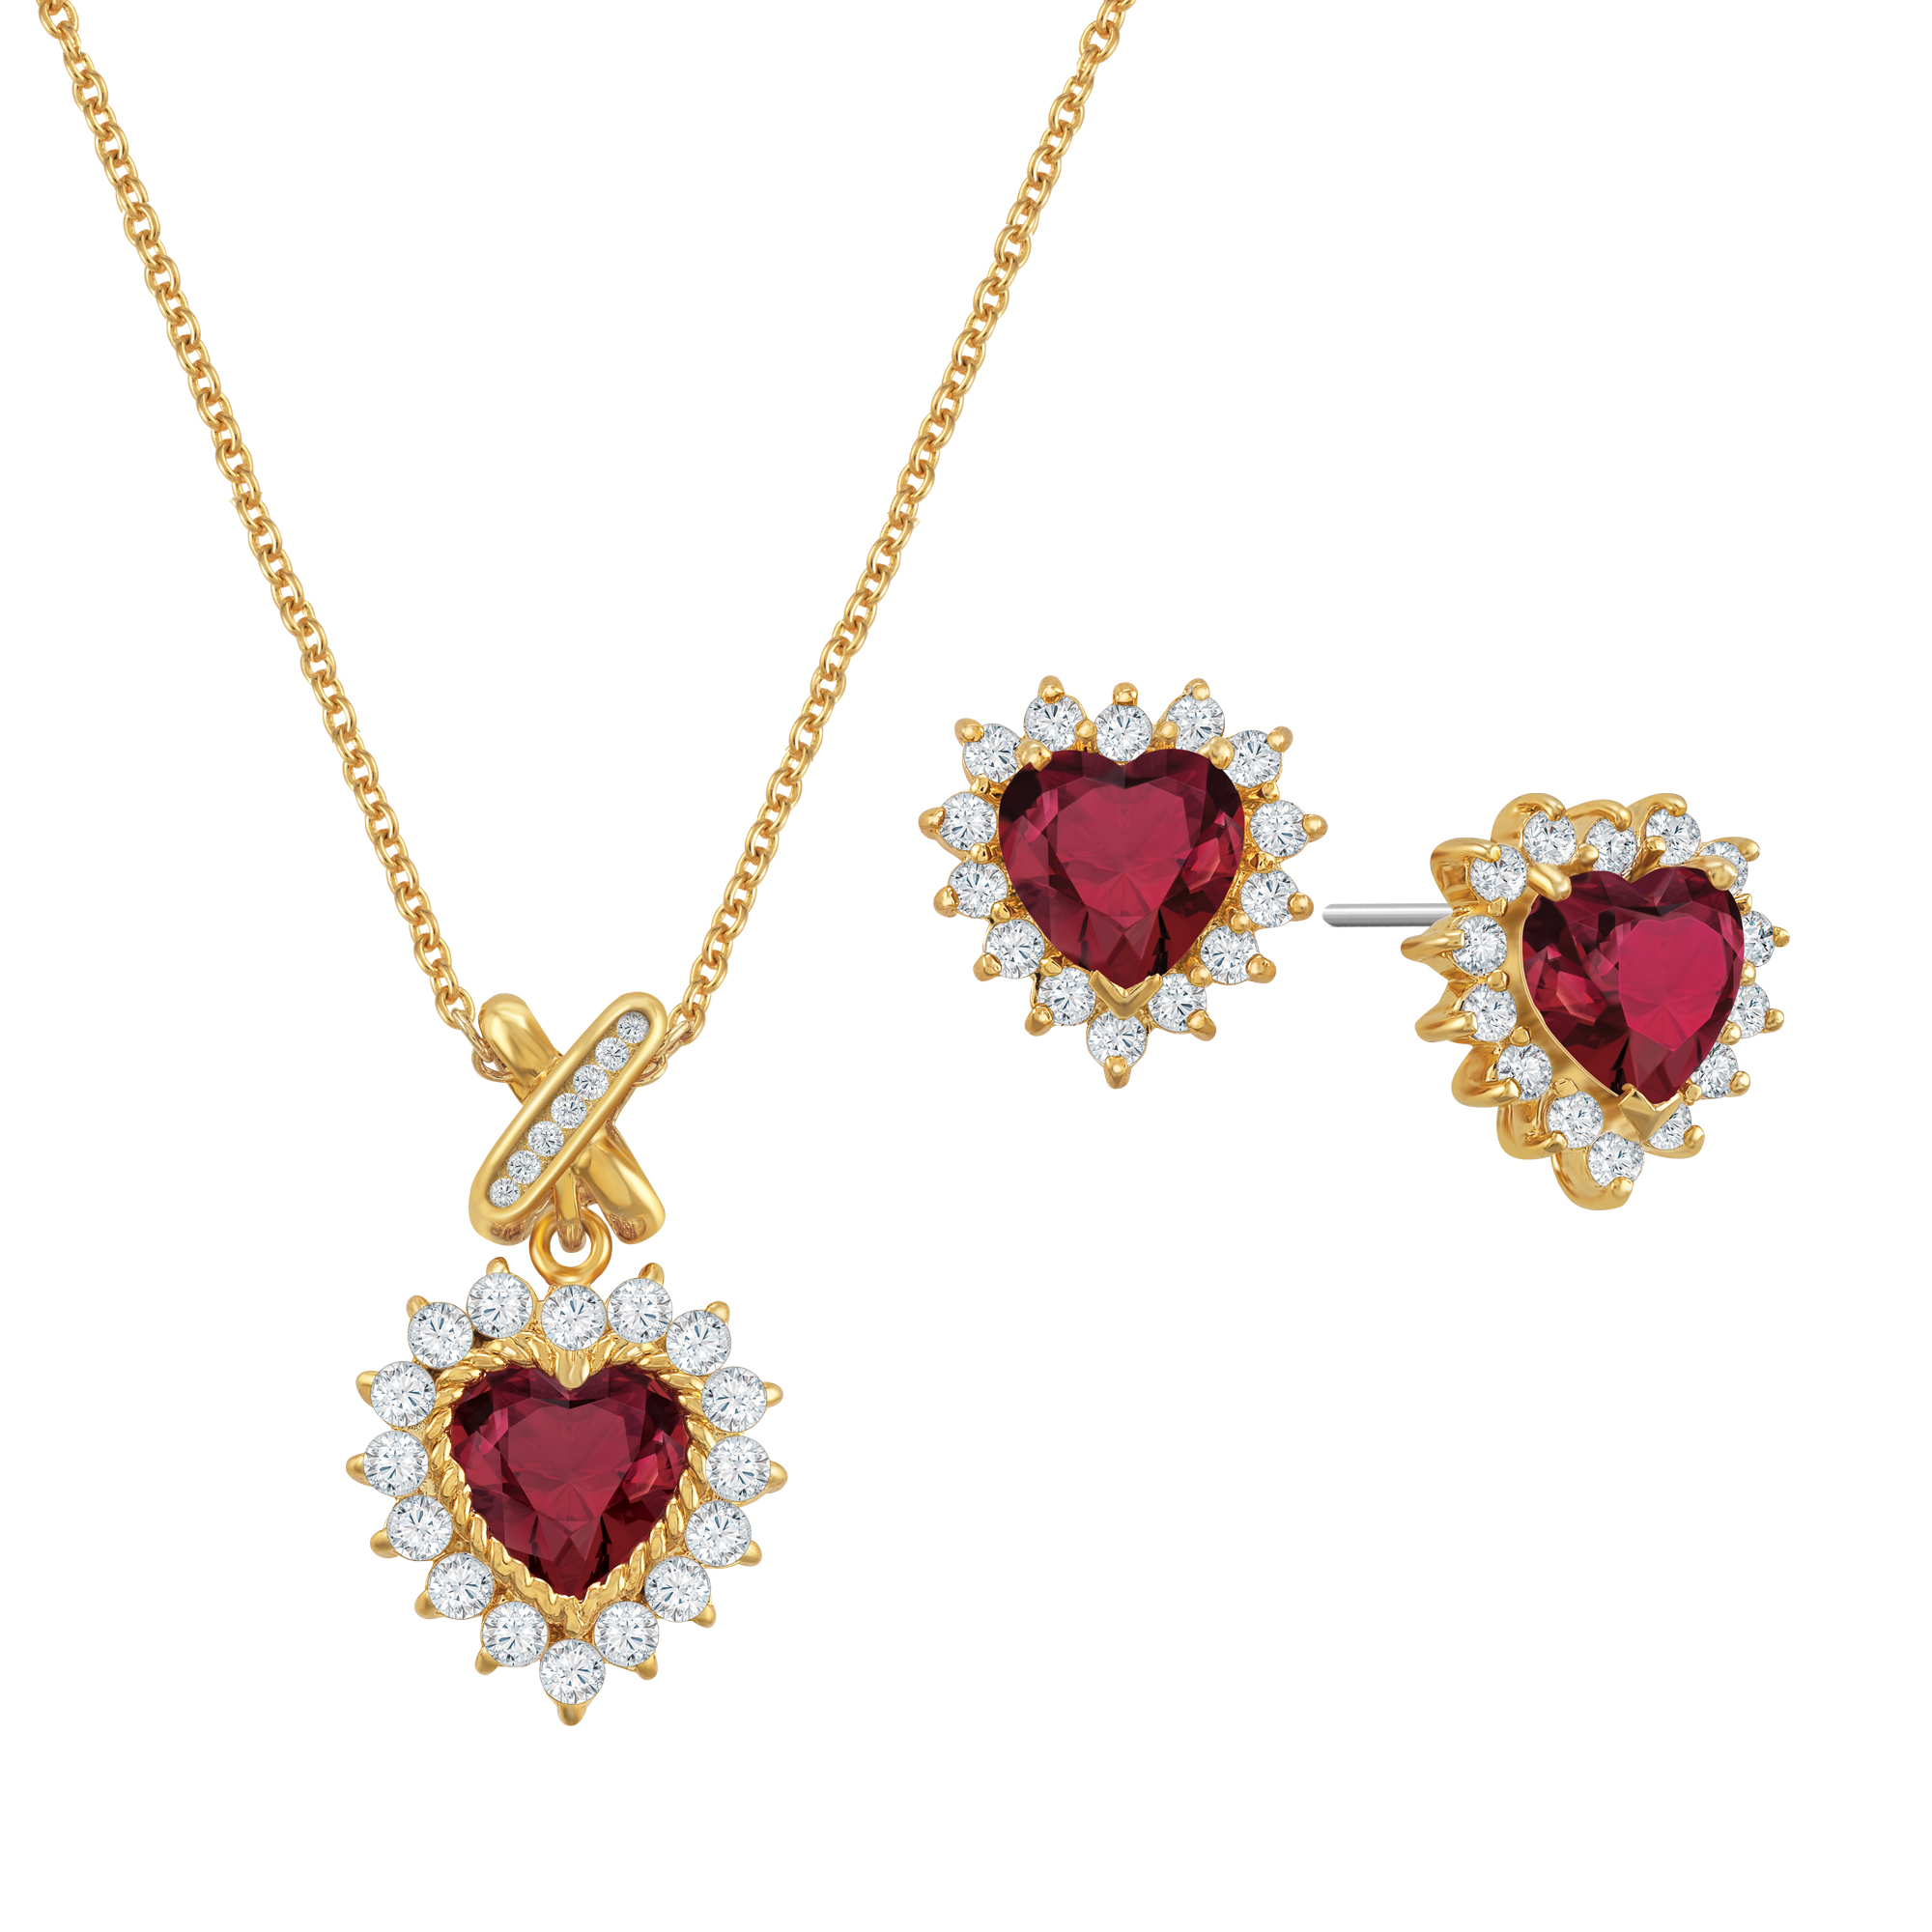 Heart Shaped Necklace and Earrings Jewelry Set - Walmart.com